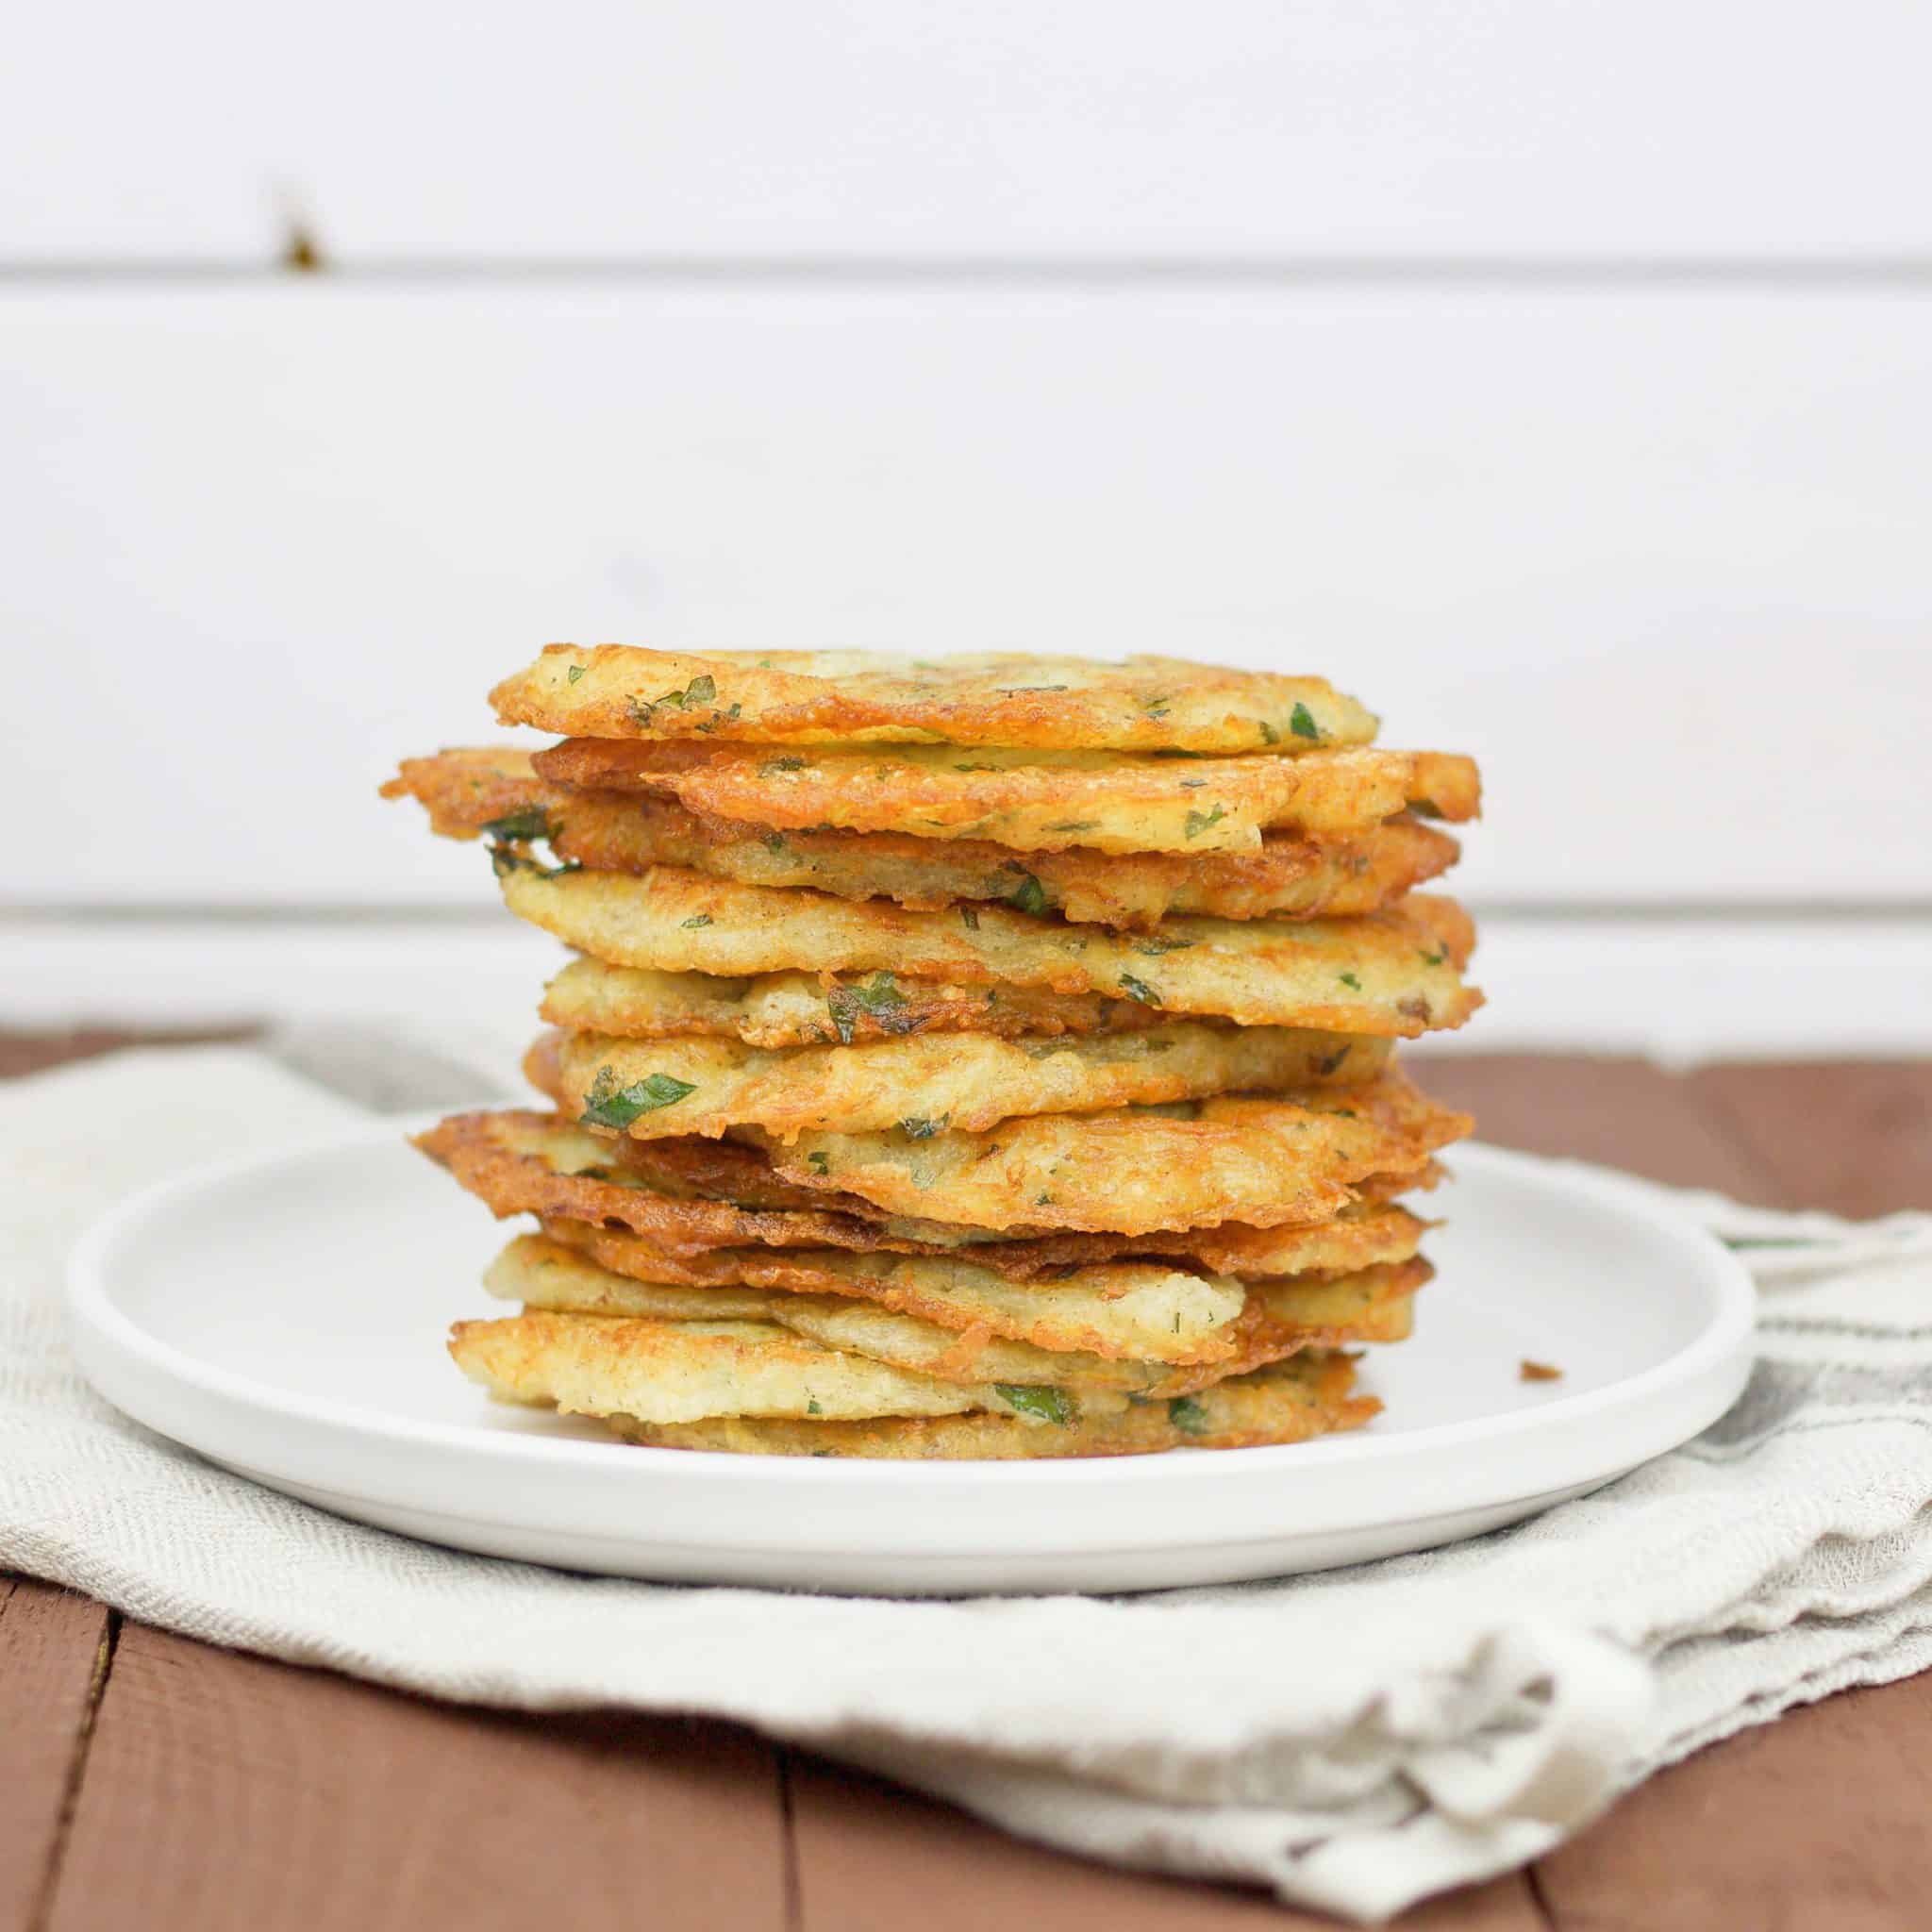 Easy vegan Potato pancakes (hashbrowns) – classic recipe